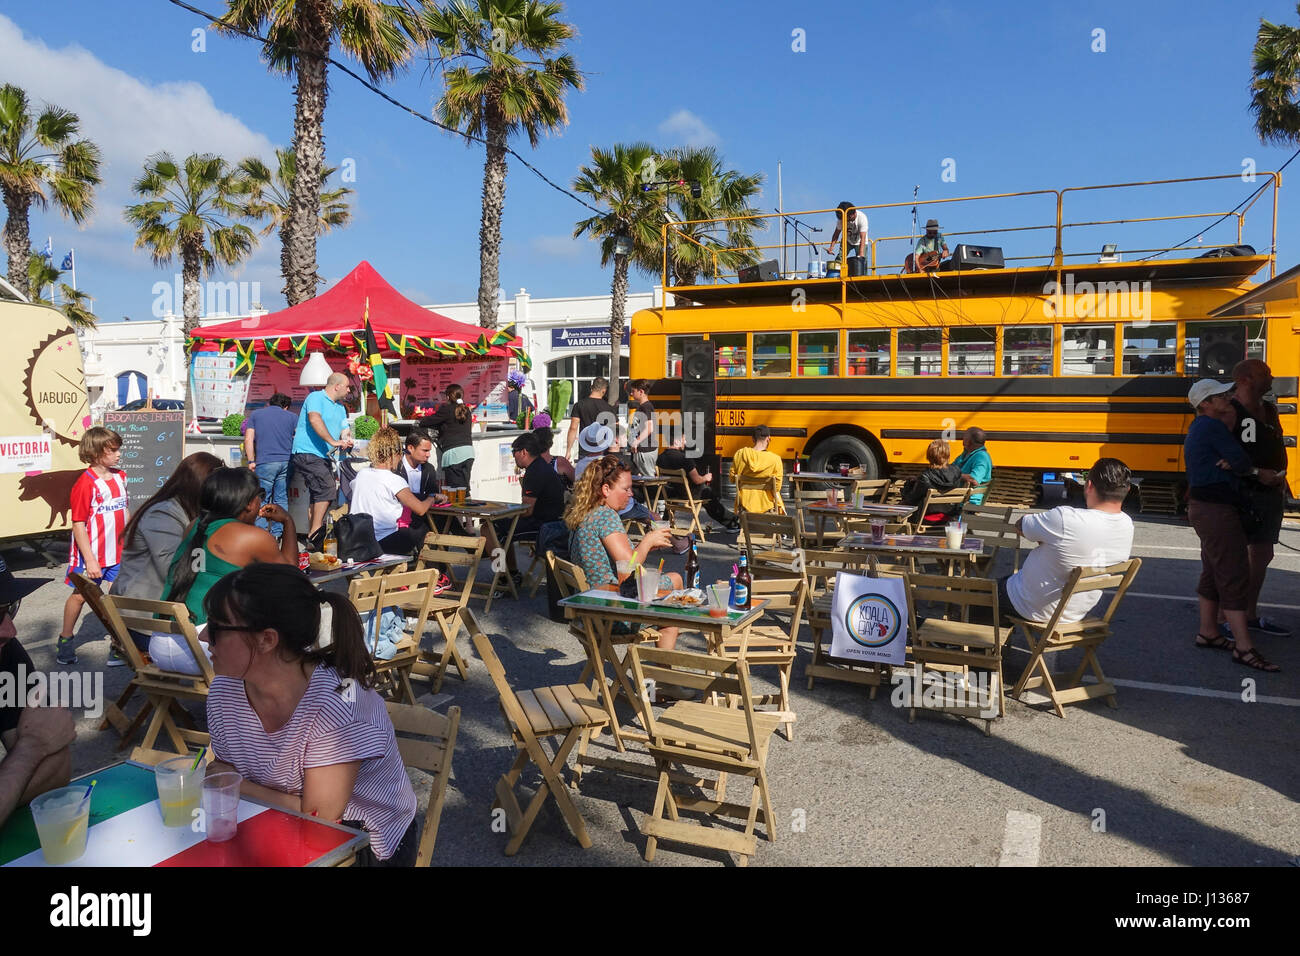 People at terrace on Food trucks festival, festive, celebration in Port of Benalmadena, Andalusia, Spain Stock Photo